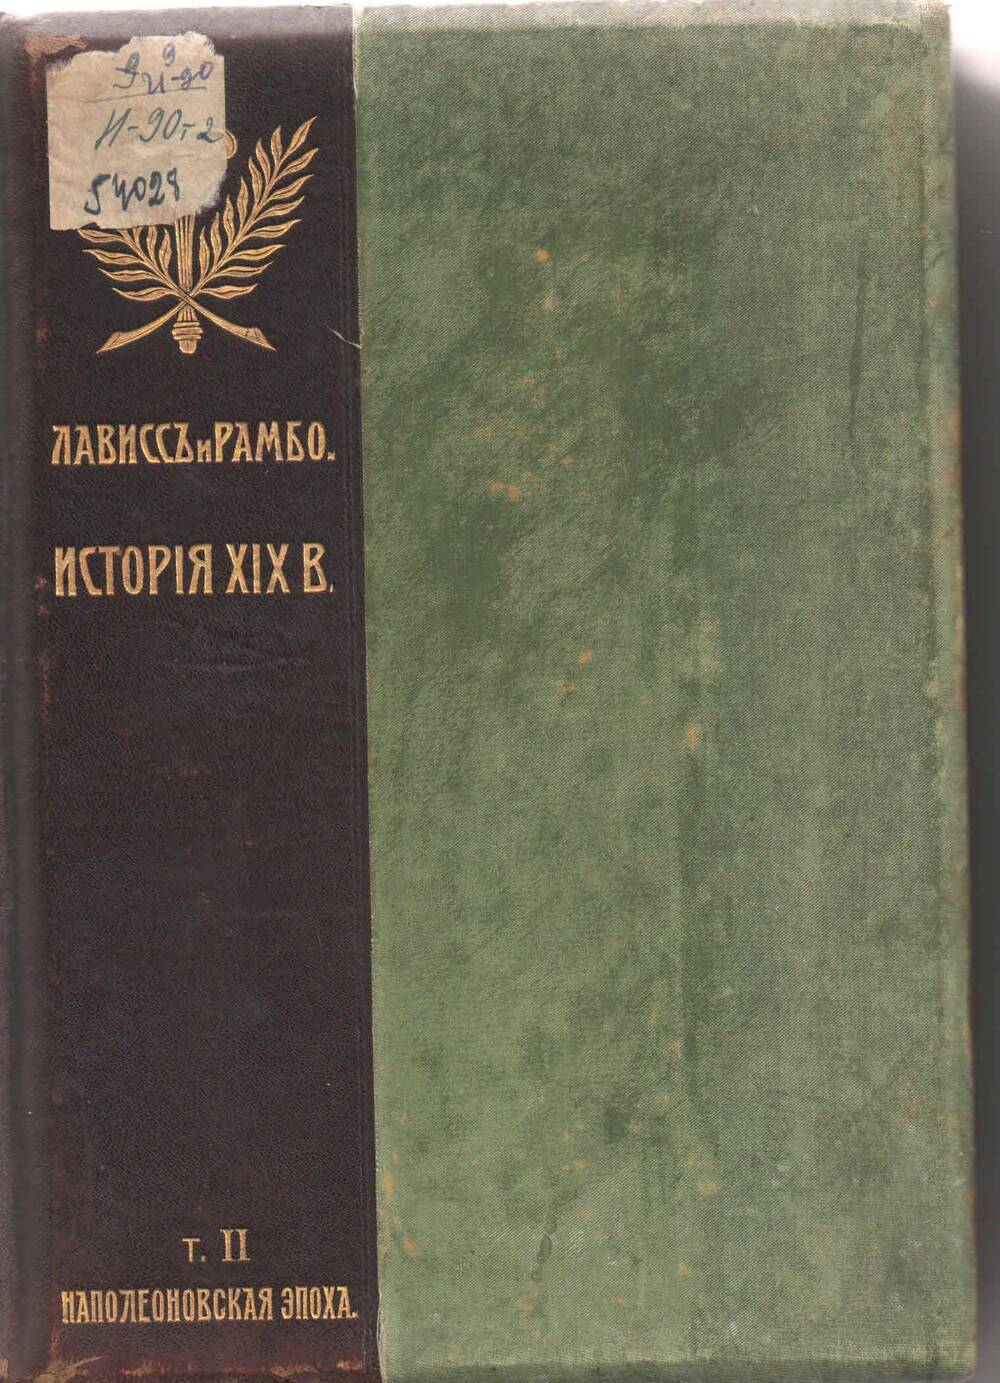 Книга: Лависс и Рамбо. История ХIХ в. т.2. 1905. - 321 с.